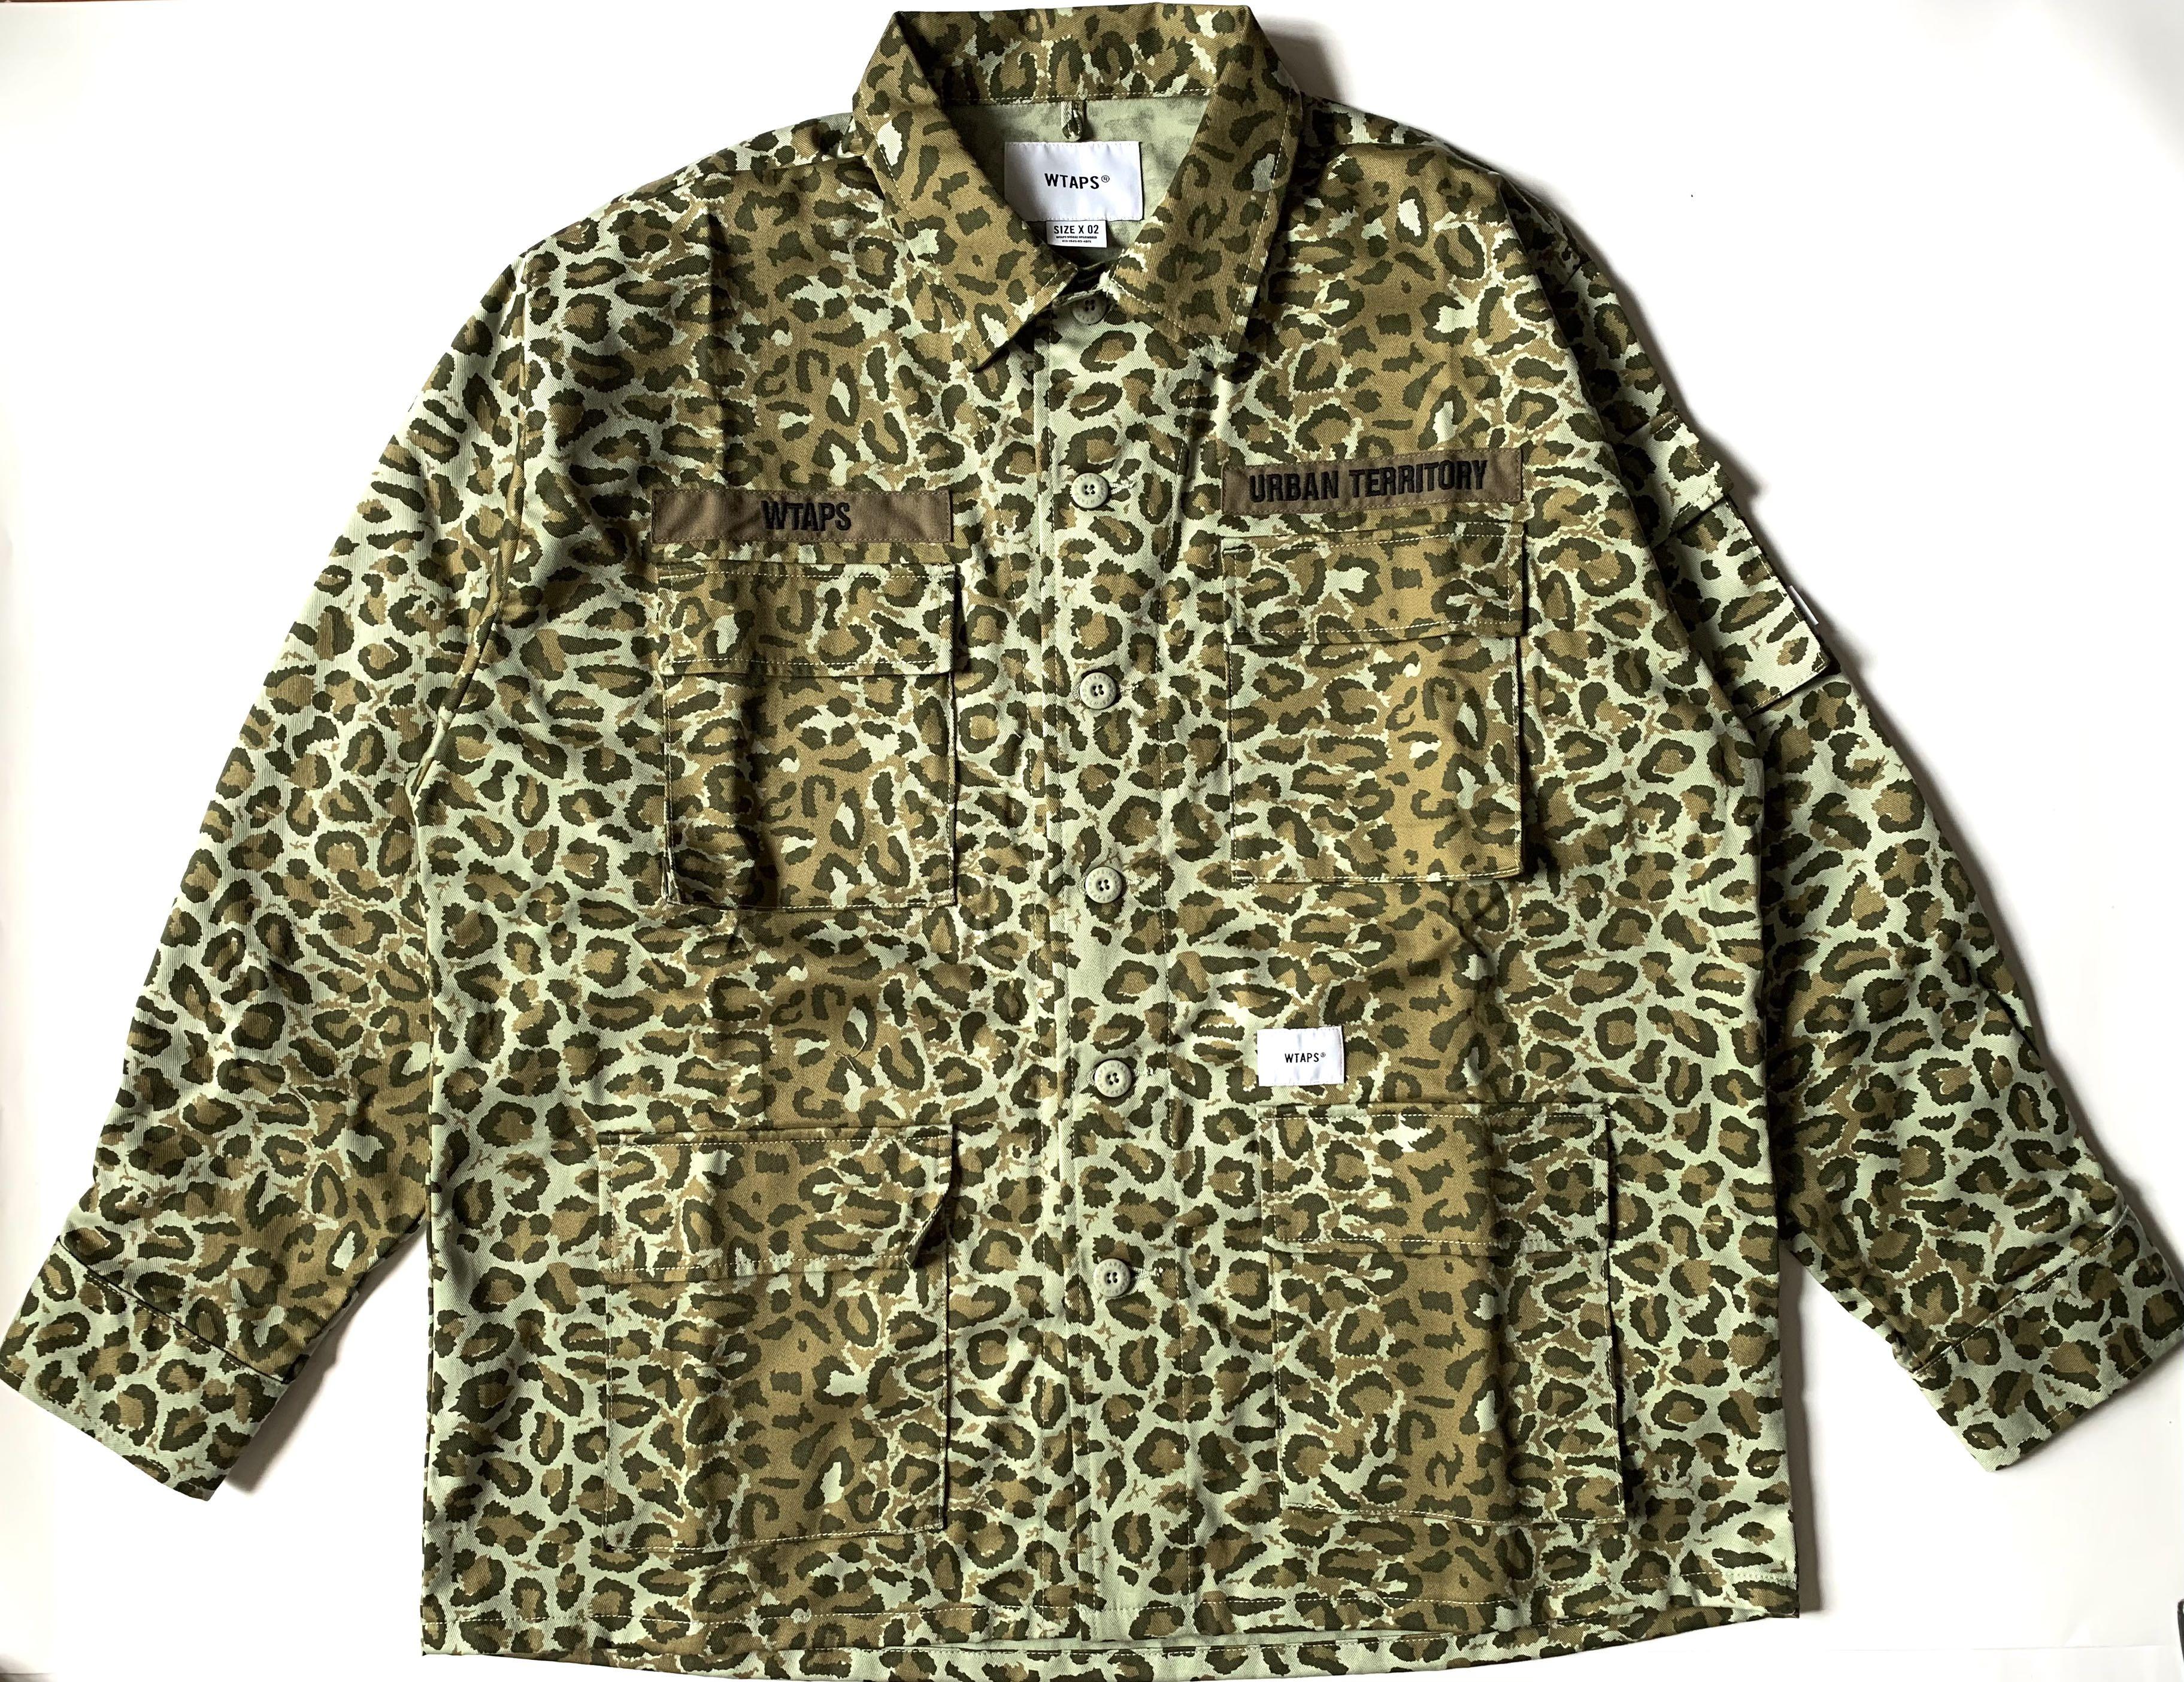 Wtaps Jungle 01 shirt leopard camo olive drab cotton twill (not ...